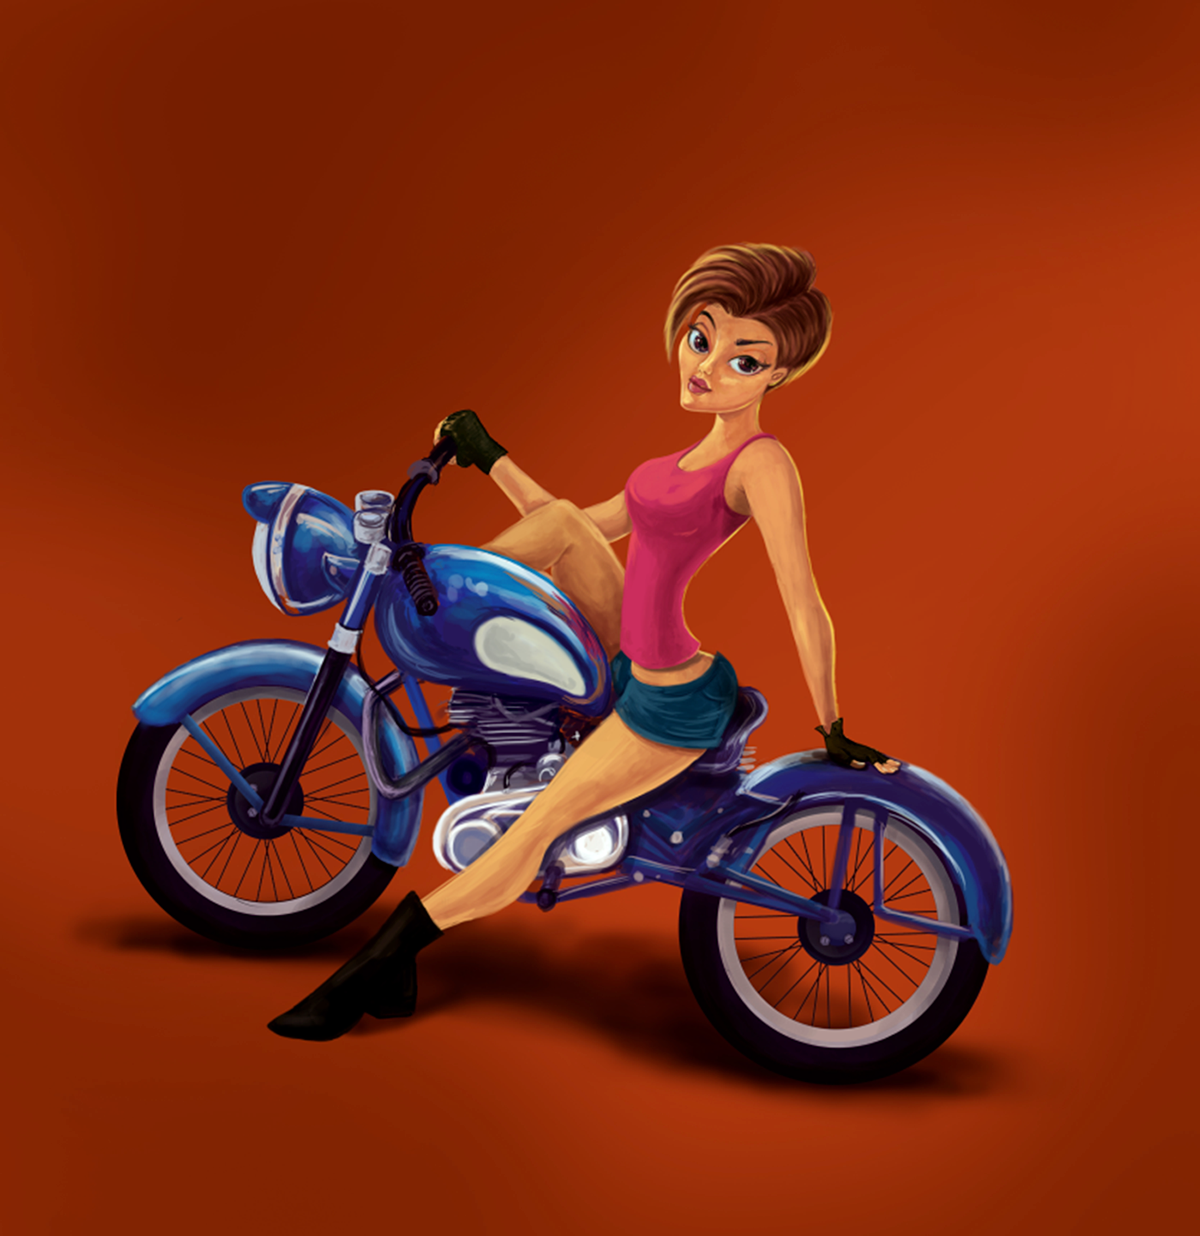 digitalart royal enfield bike girl